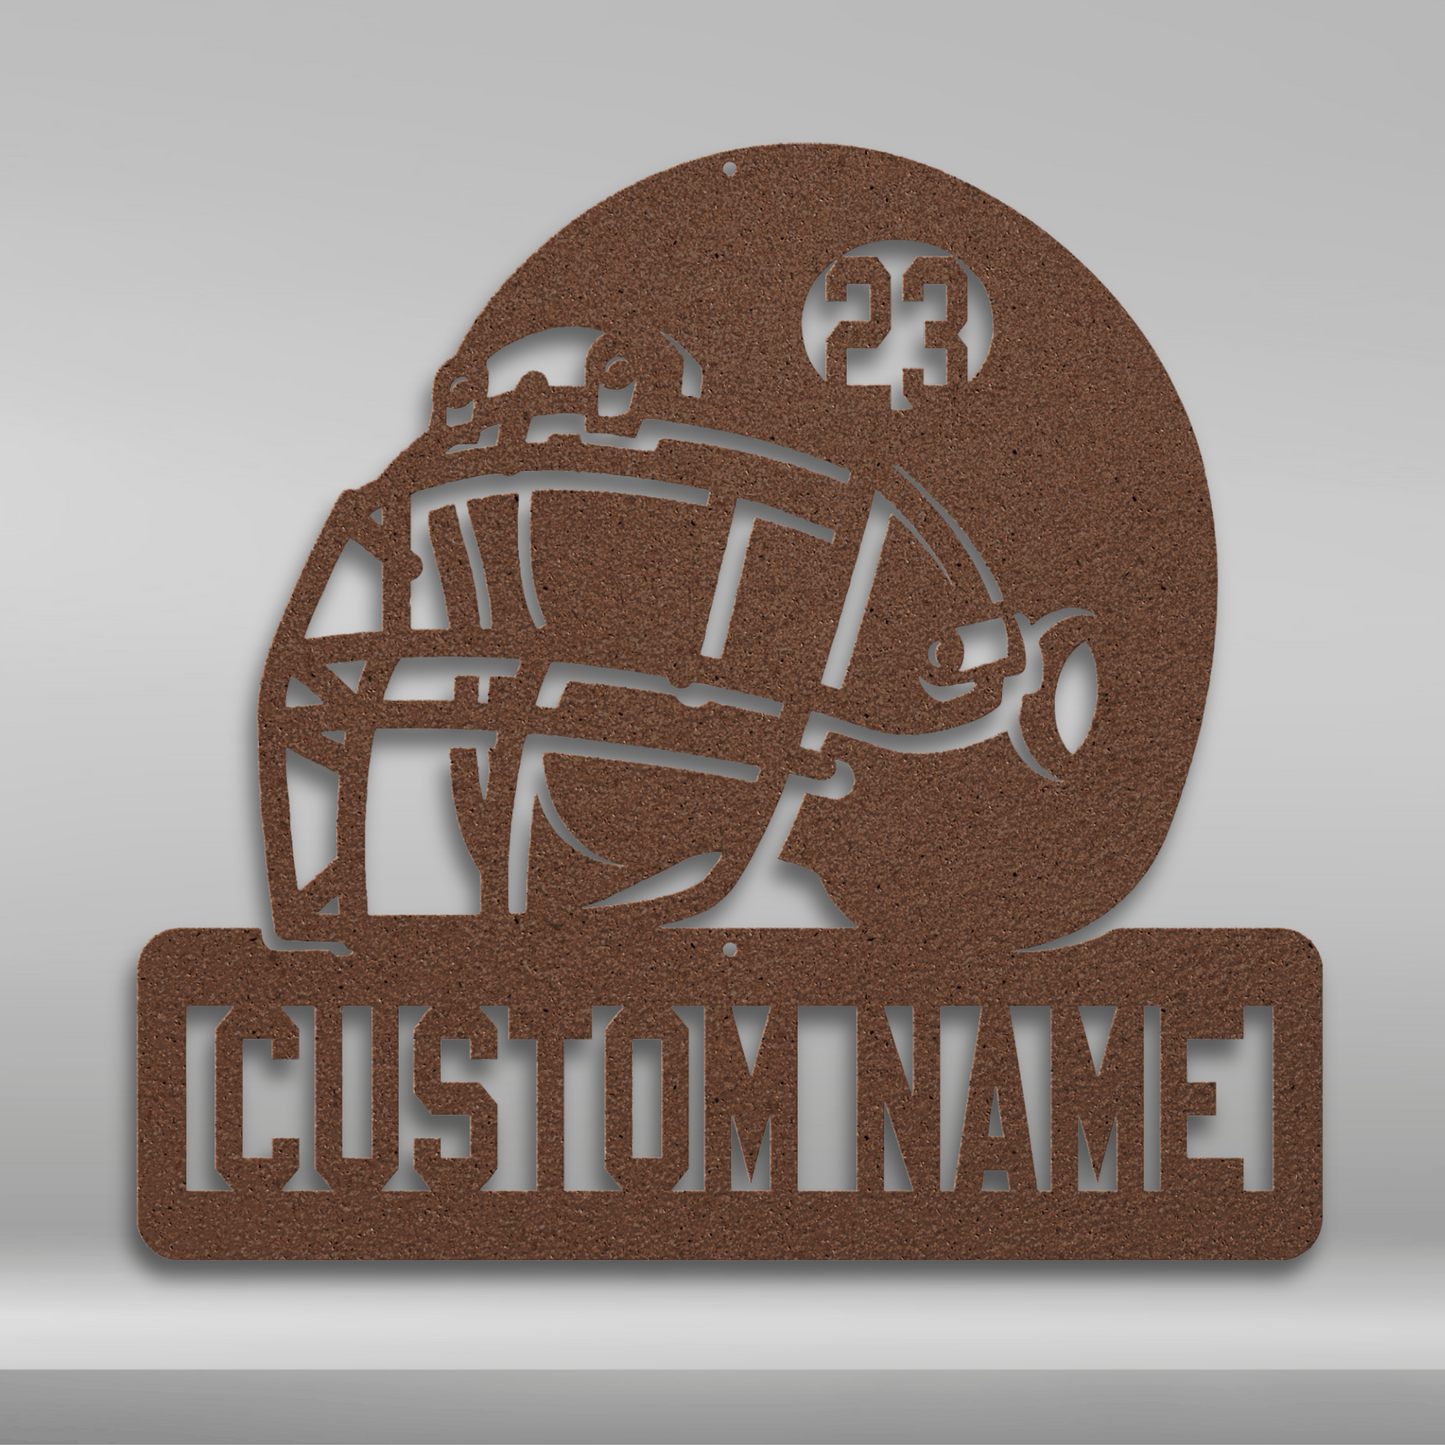 Custom Name Boy's Football Helmet - Metal Sign